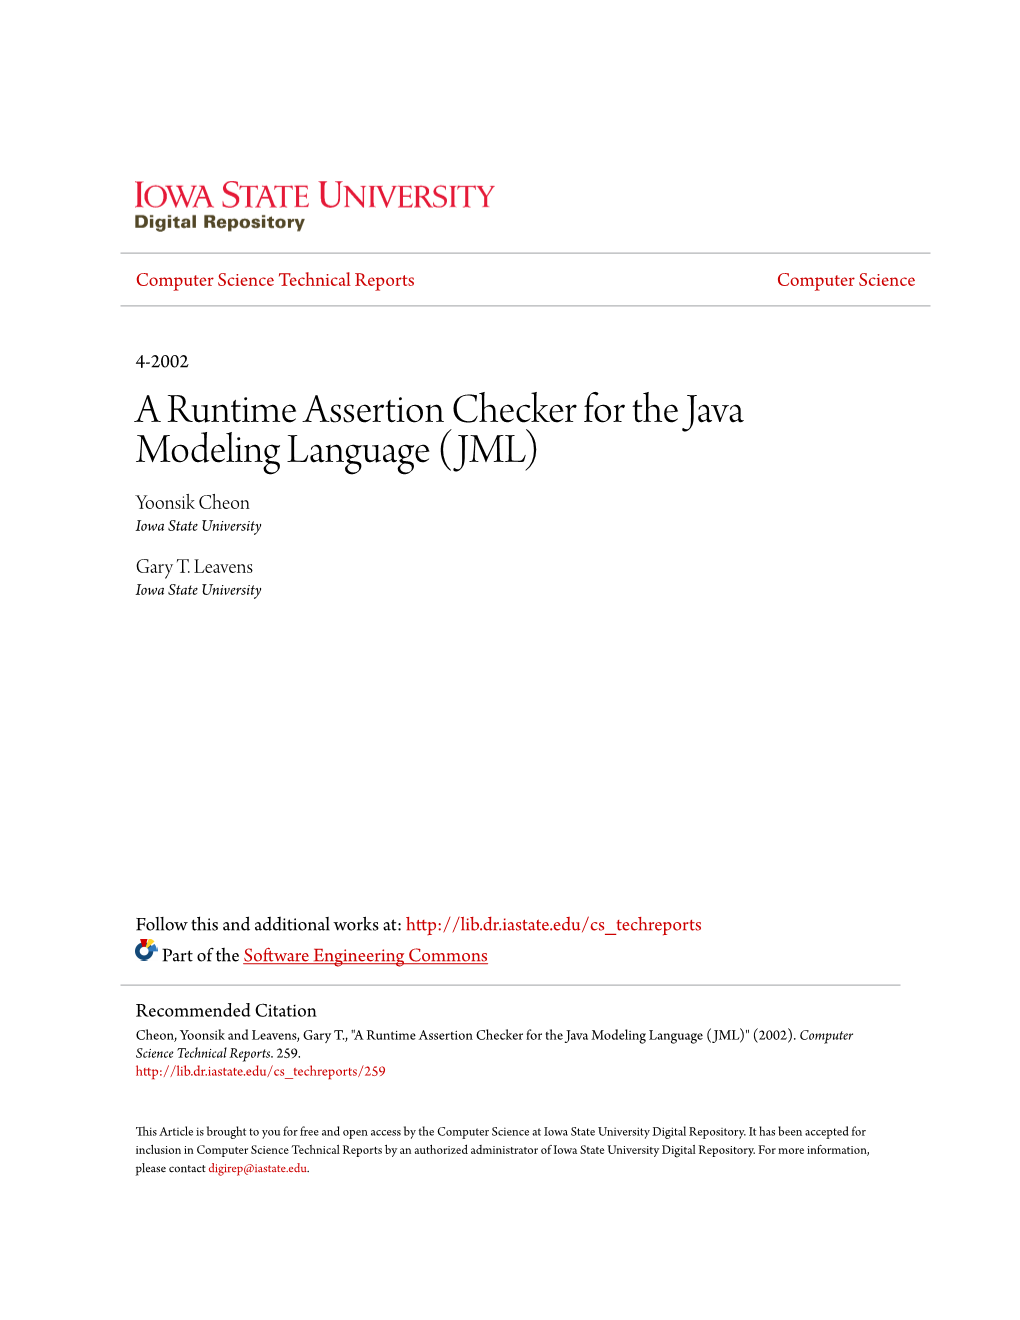 A Runtime Assertion Checker for the Java Modeling Language (JML) Yoonsik Cheon Iowa State University